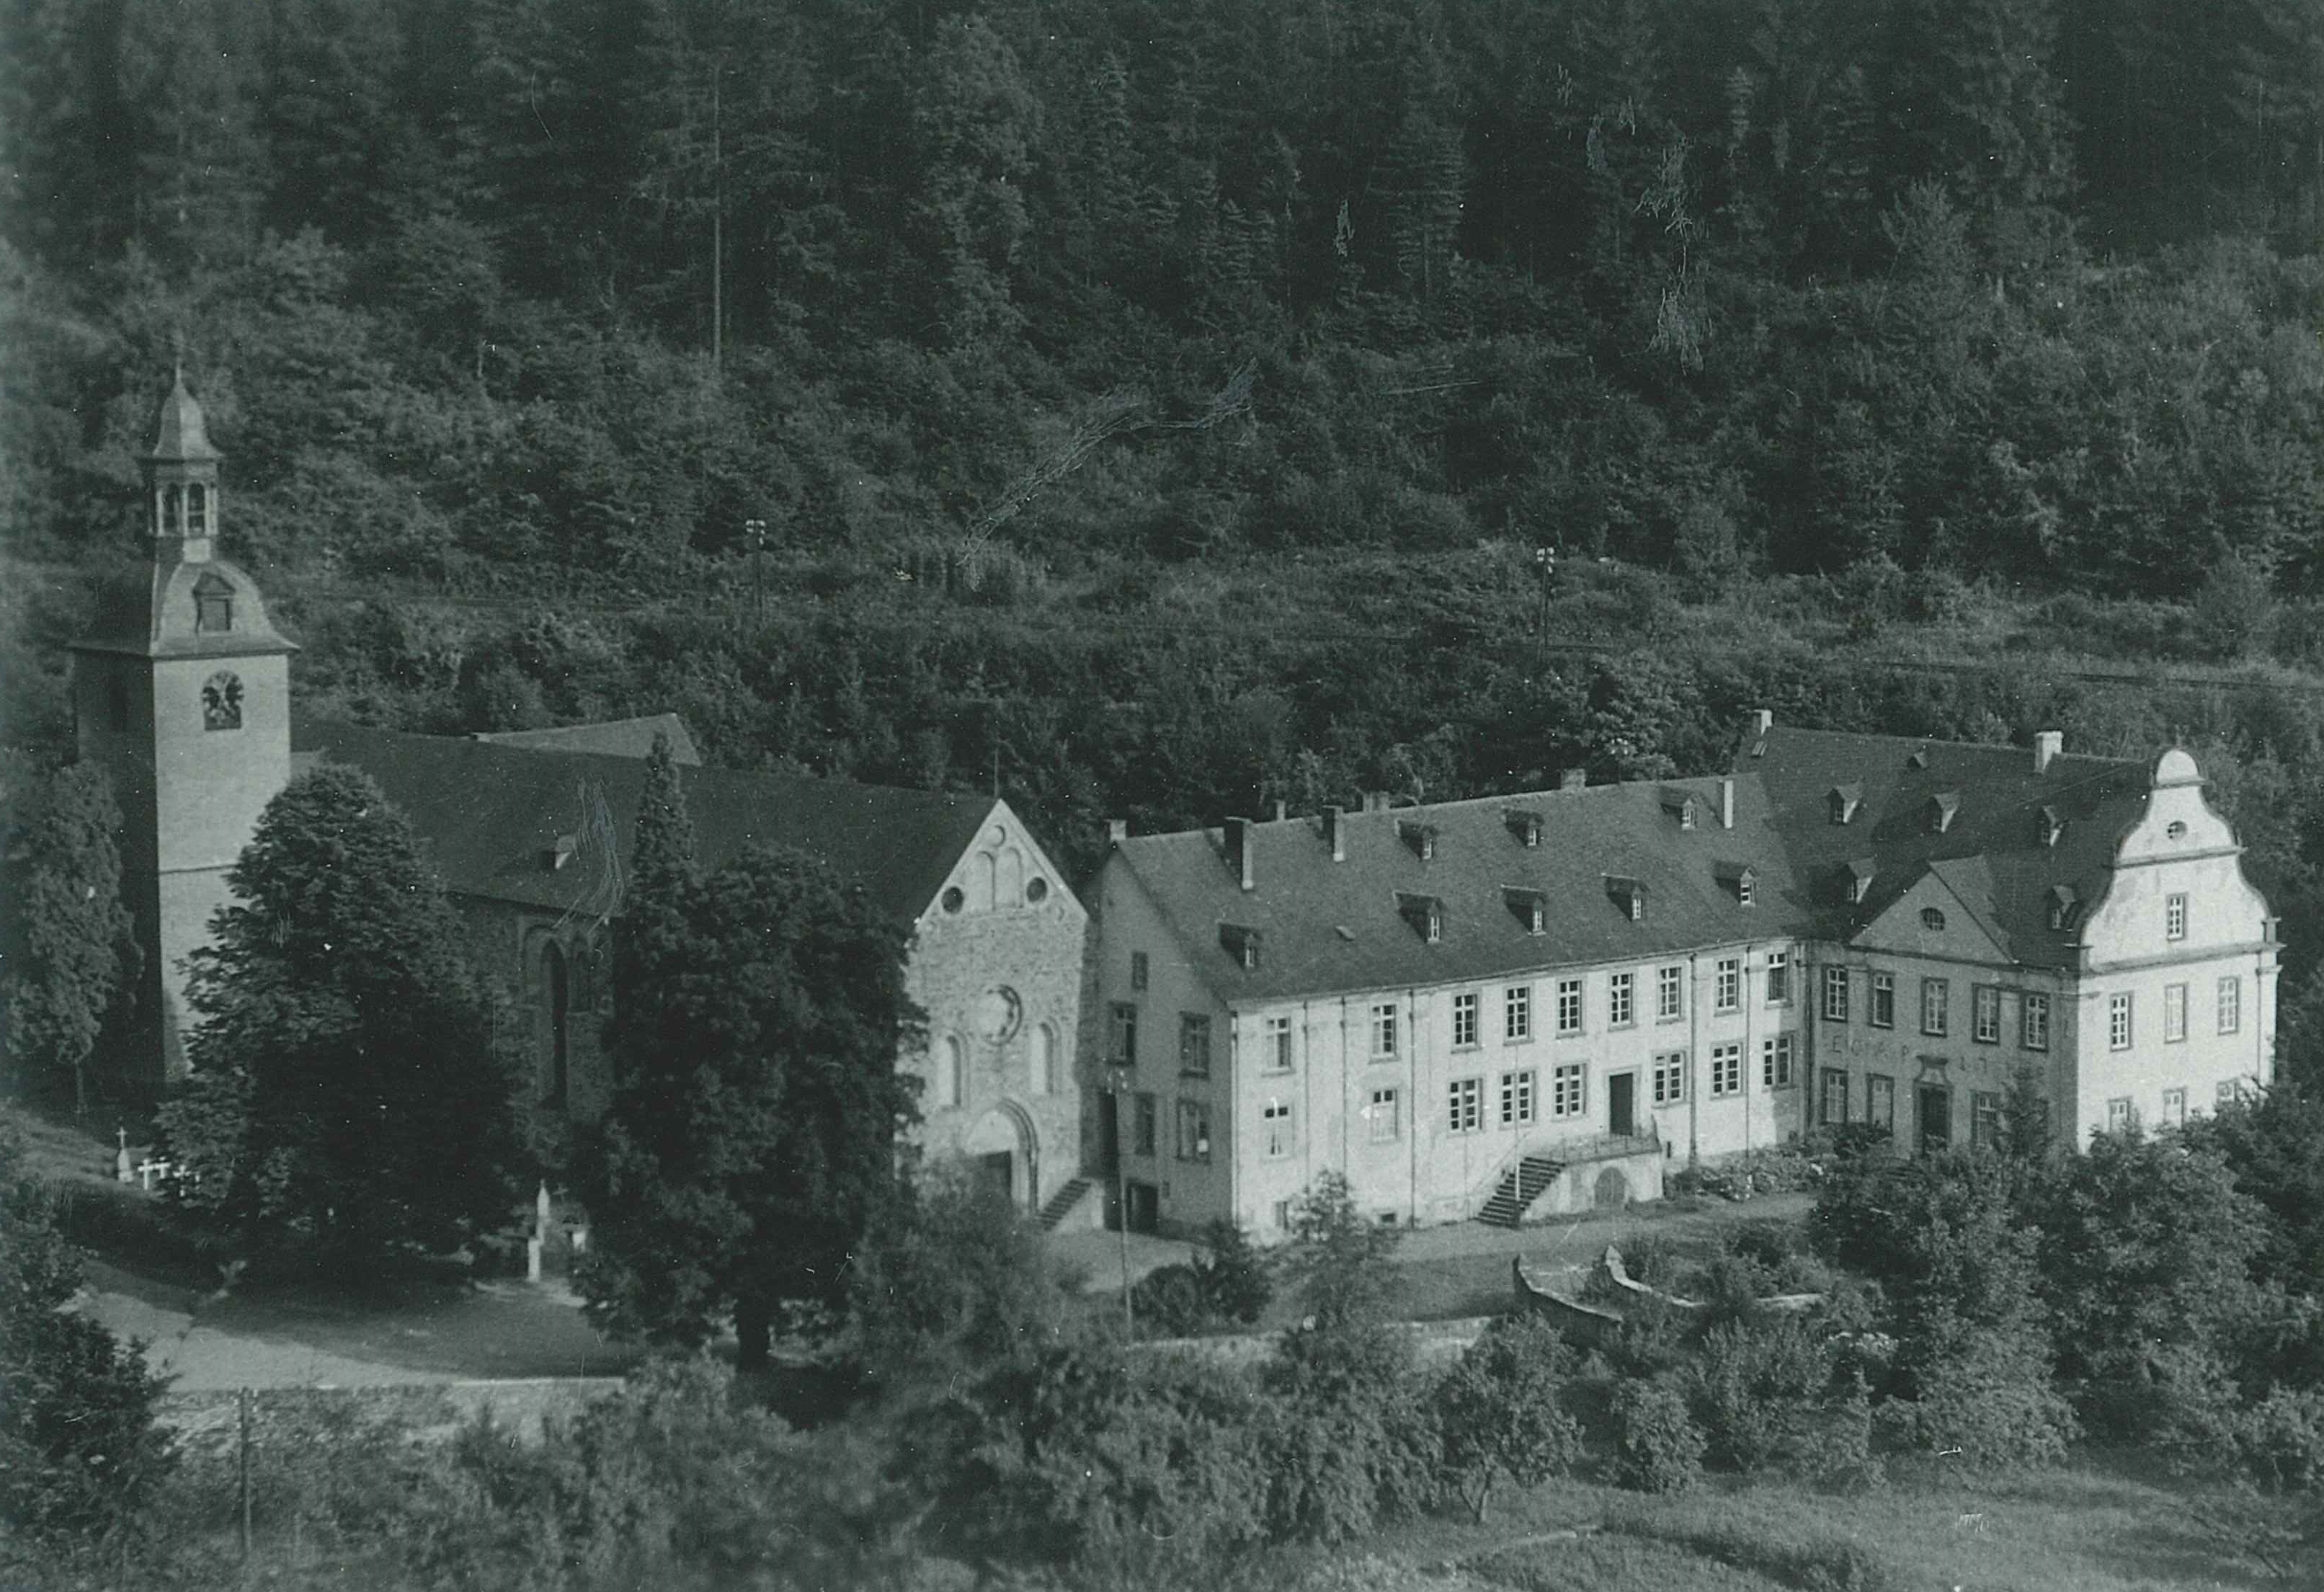 Blick auf die Abtei Sayn, 1950er Jahre (REM CC BY-NC-SA)